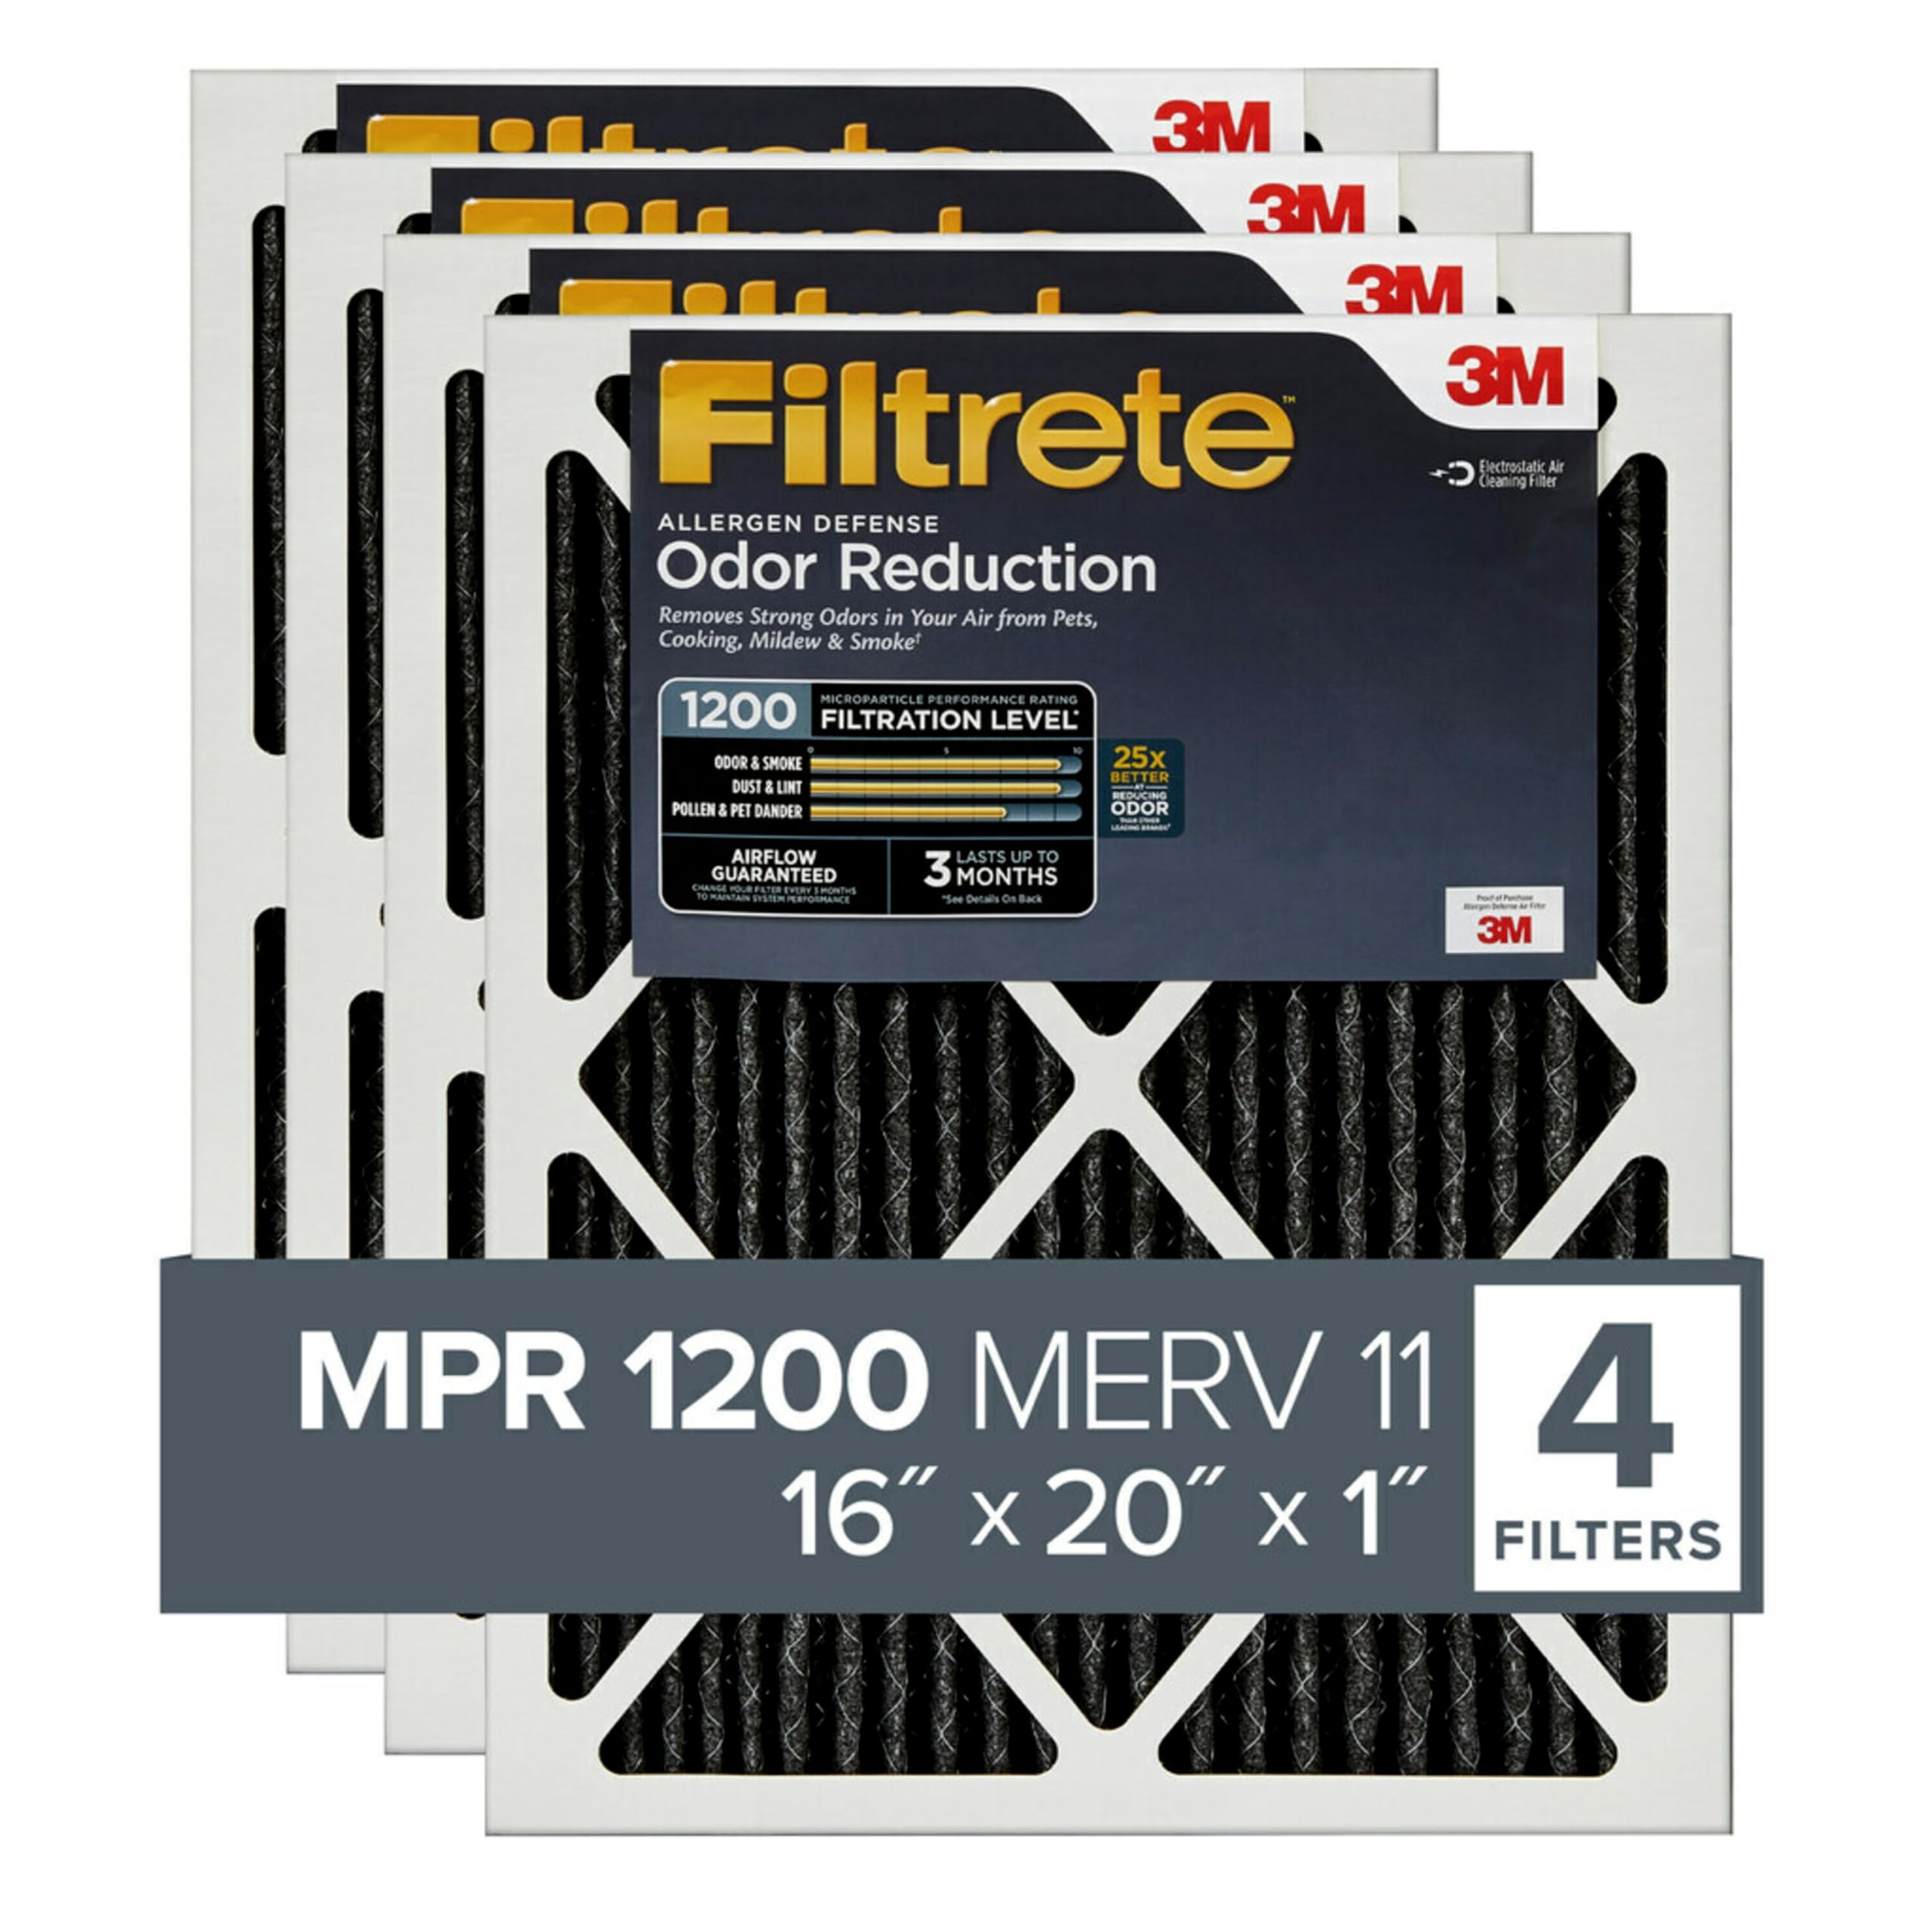 Filtrete 16x20x1 Air Filter MPR 1200 MERV 11, Allergen Defense Odor Reduction, 4-Pack (exact dimensions 15.69x19.69x0.81)